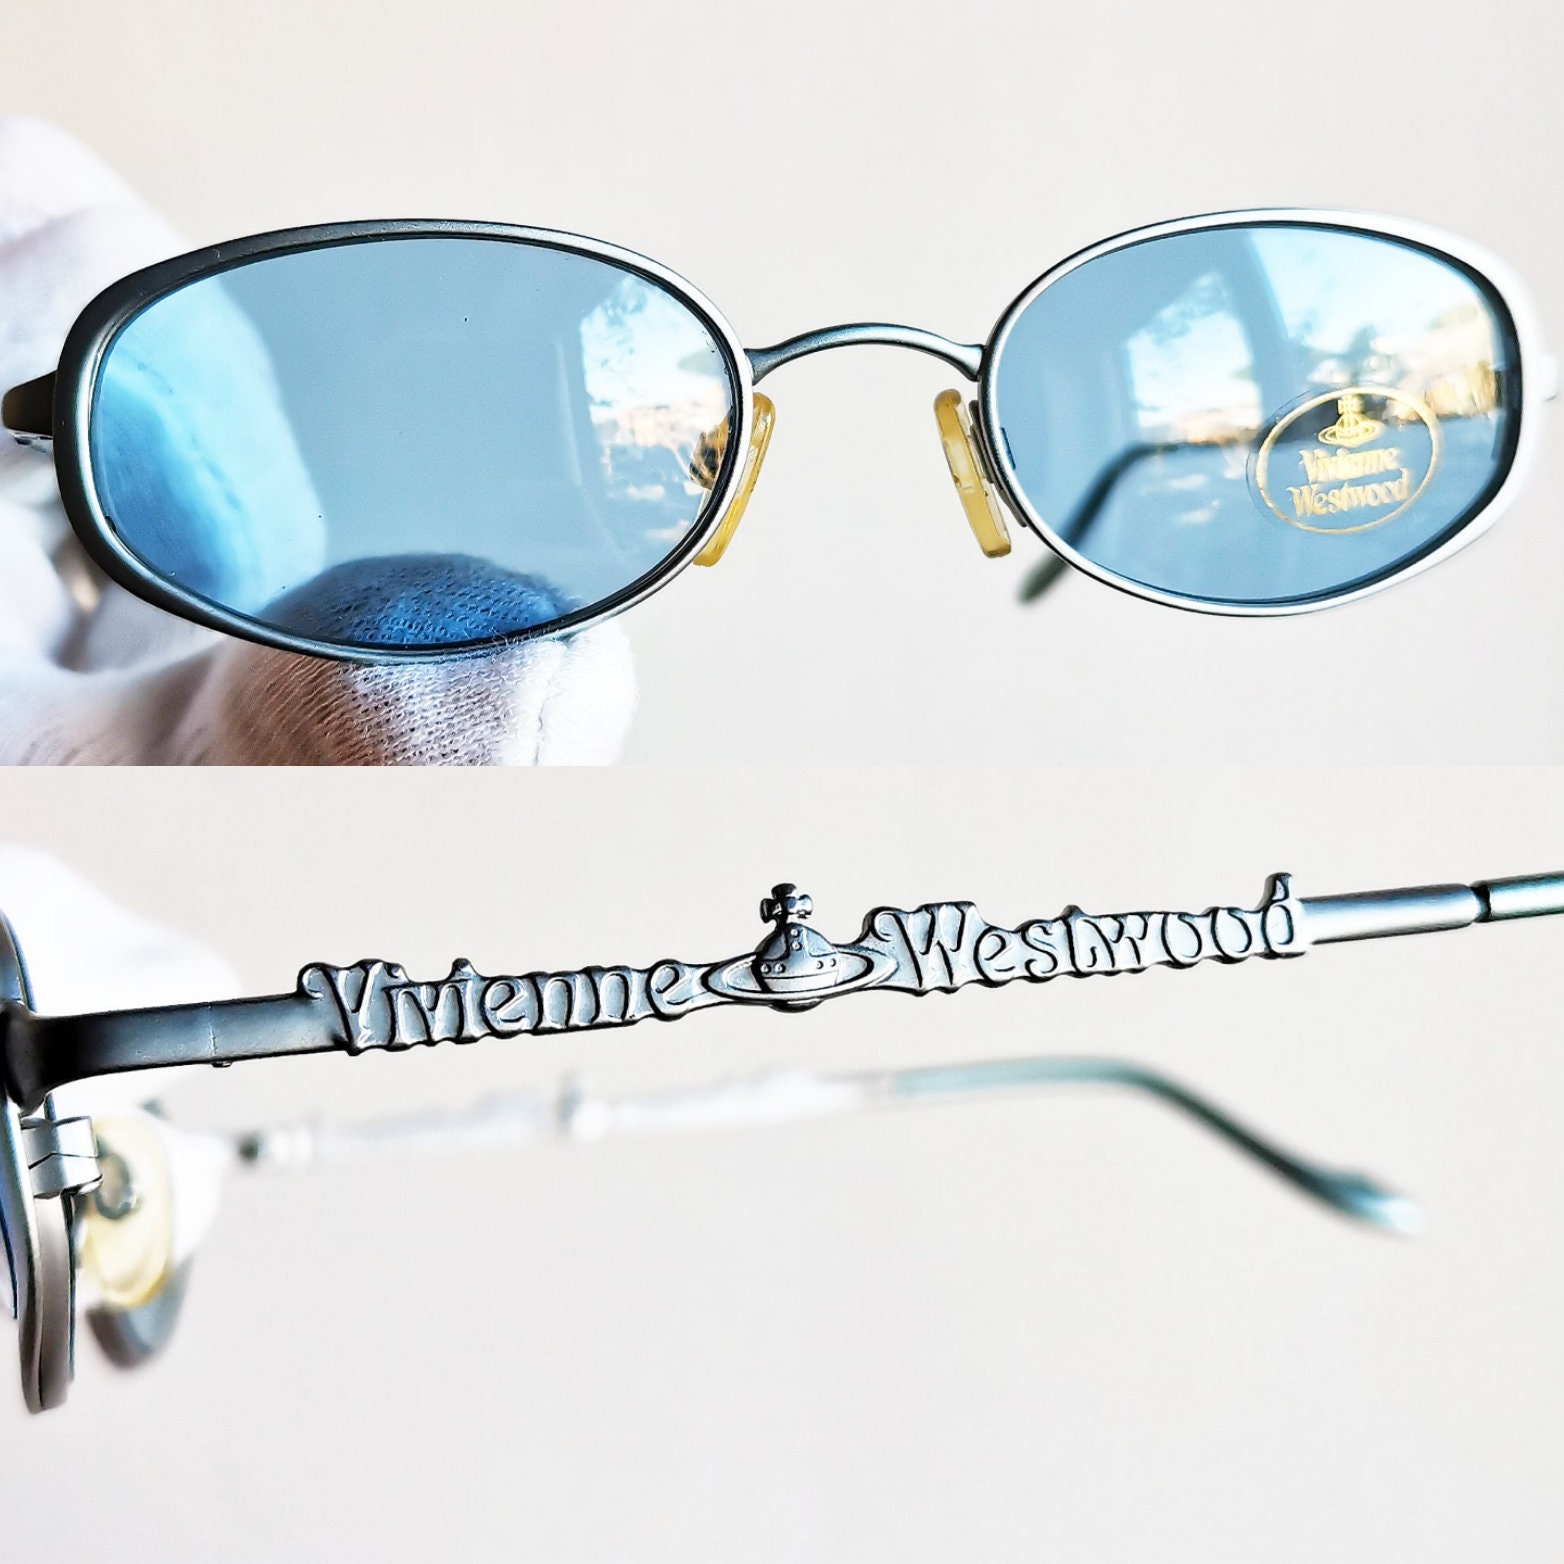 Shop Vivienne Westwood Heart Street Style Sunglasses by Nimin